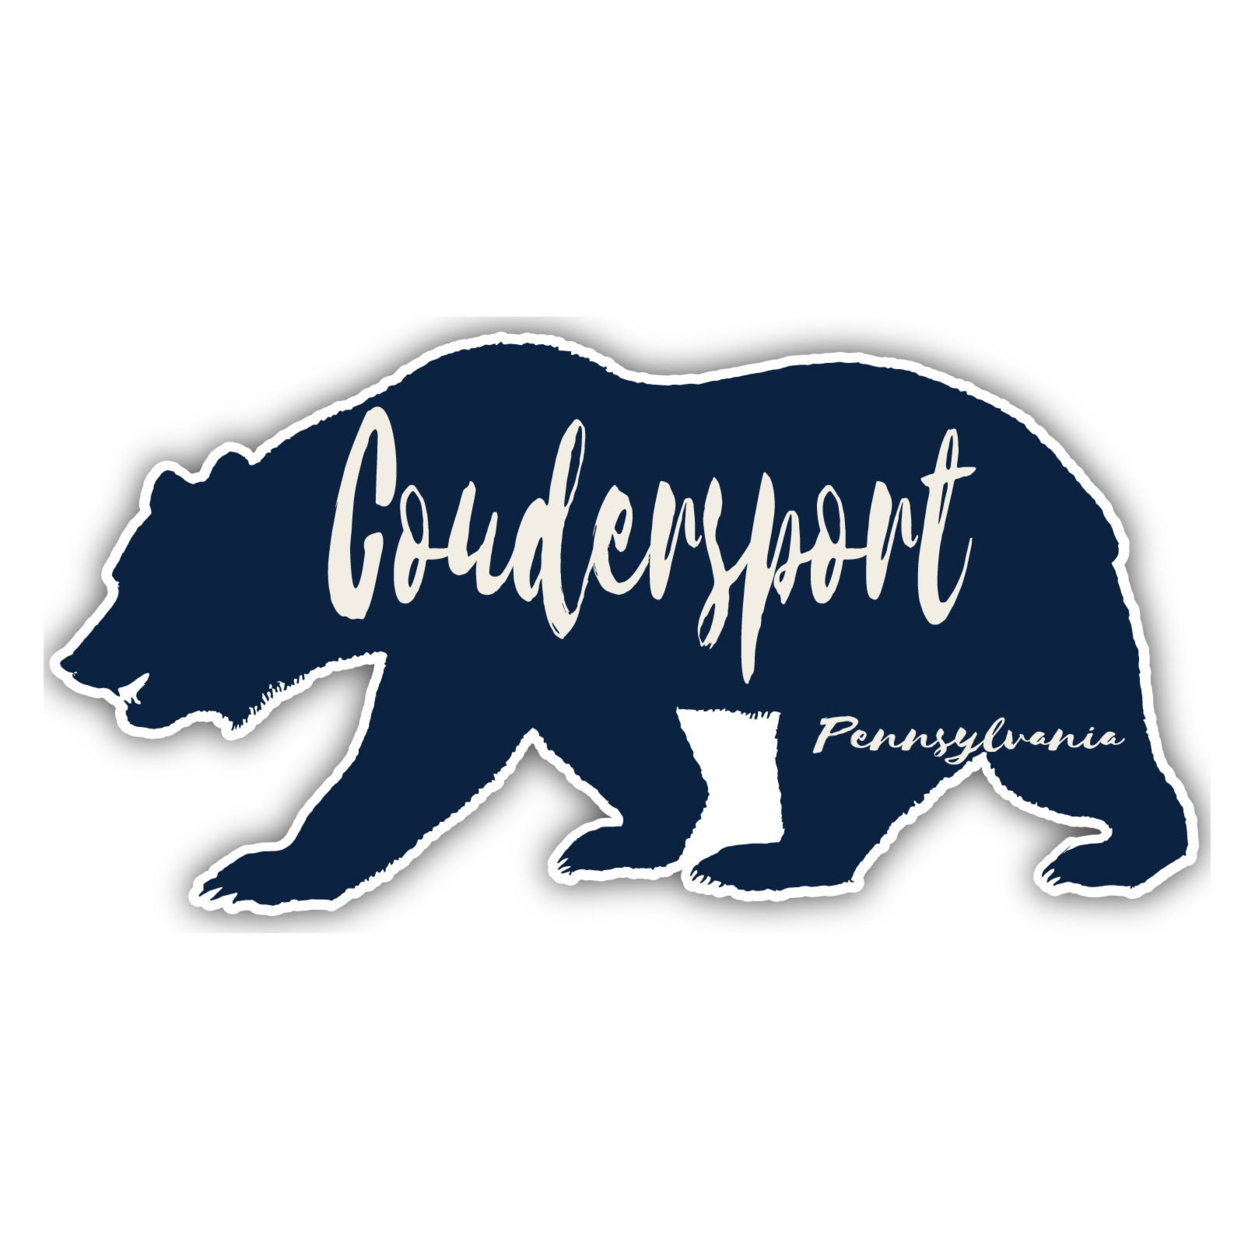 Coudersport Pennsylvania Souvenir Decorative Stickers (Choose Theme And Size) - Single Unit, 10-Inch, Bear